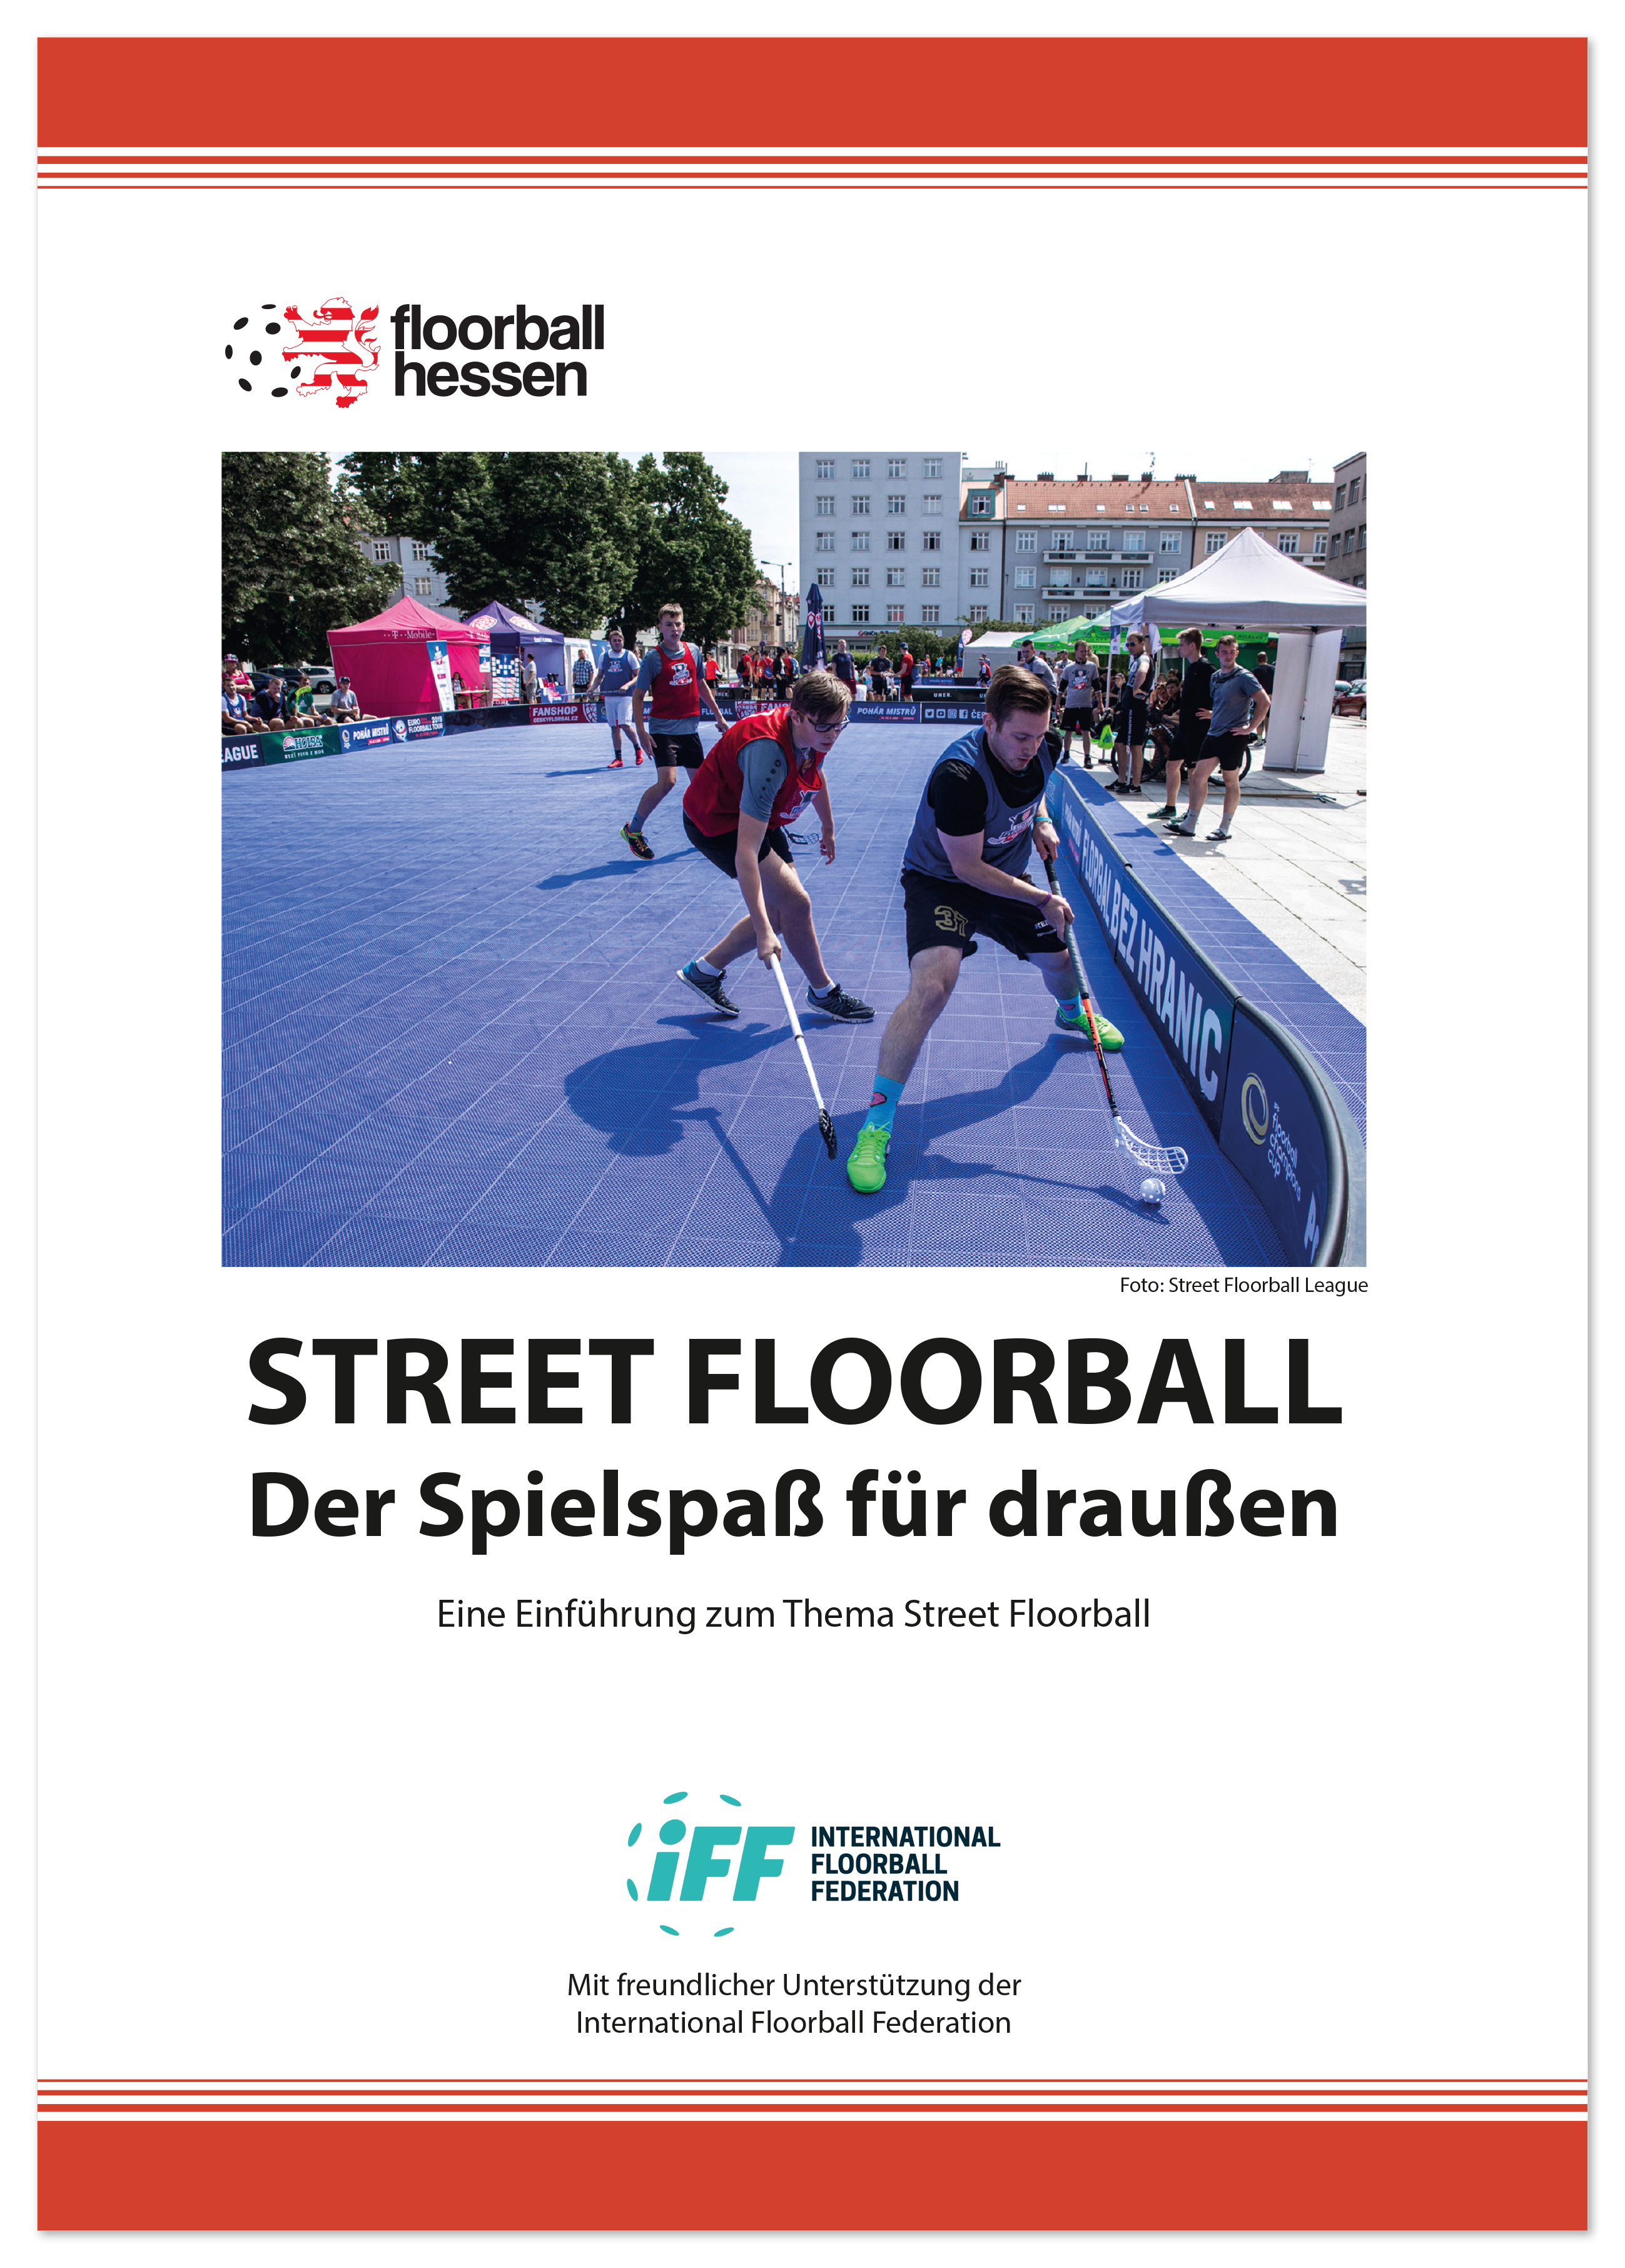 FVH IFF Street Floorball im Schulsport